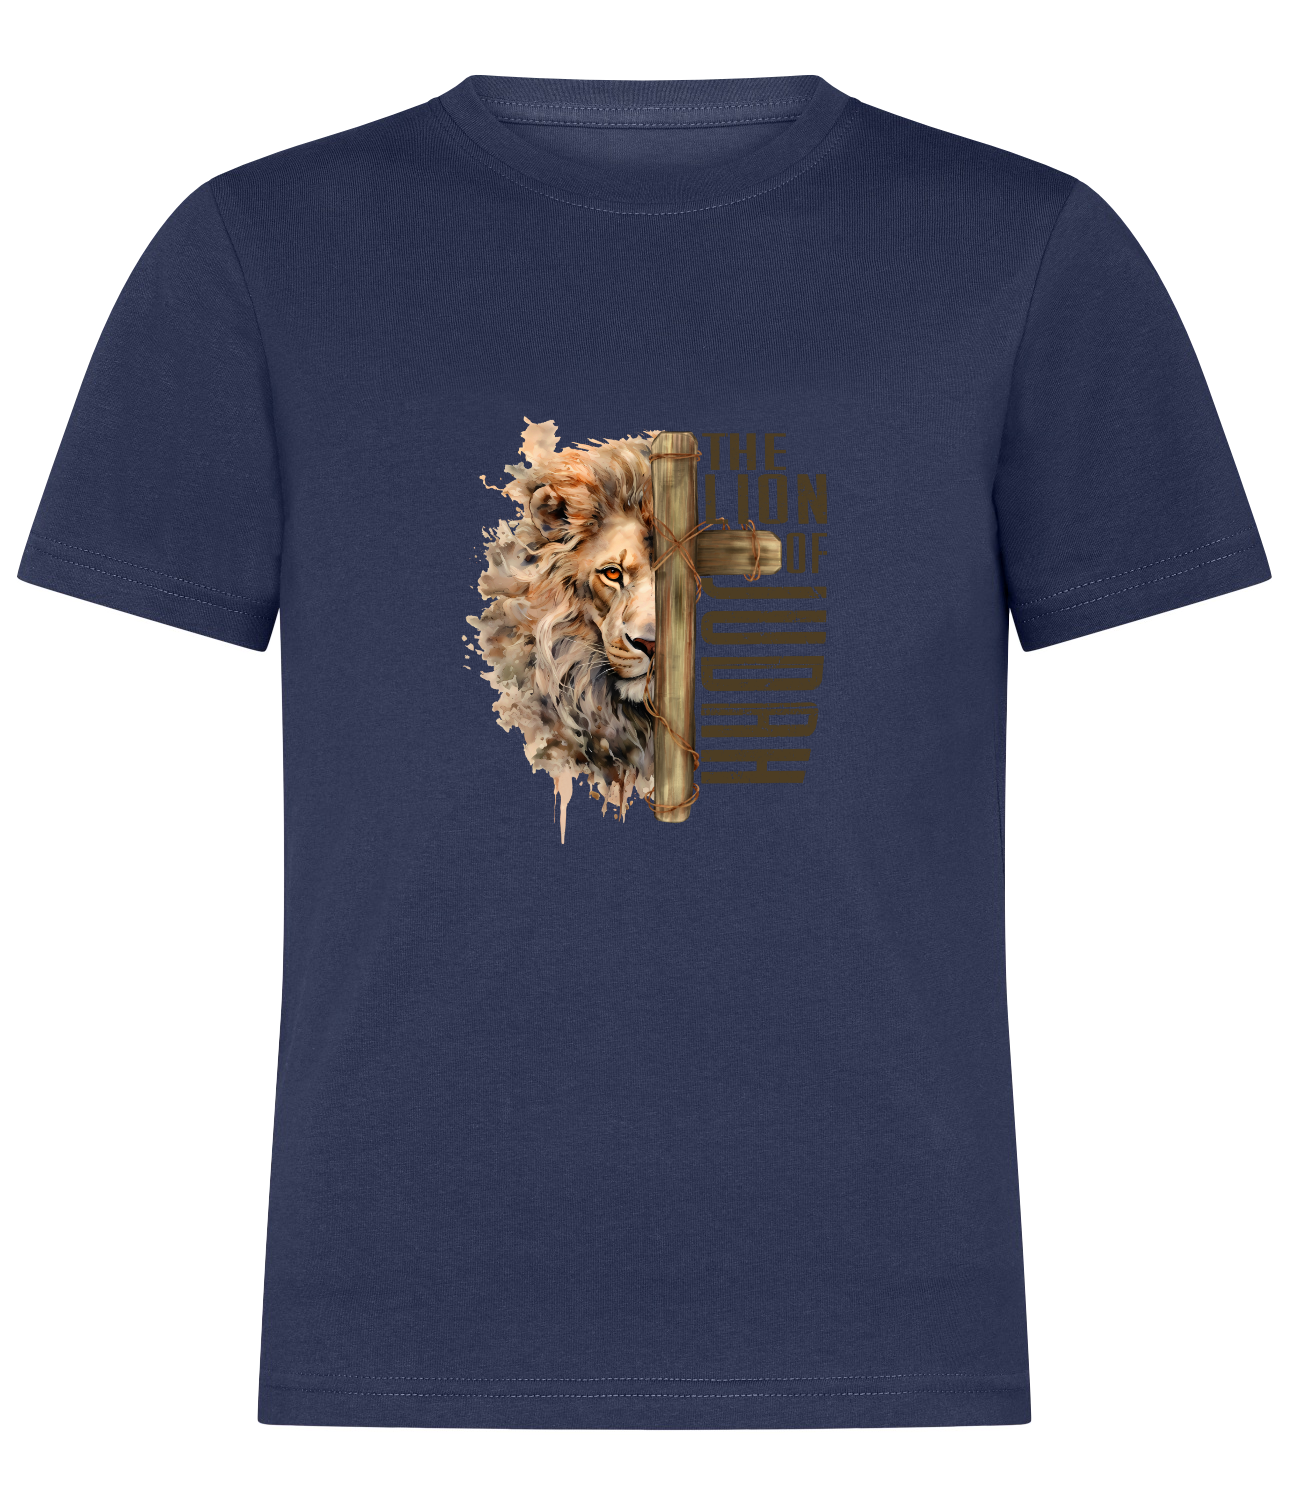 KIDS pREHmium Shirt - The Lion of Judah